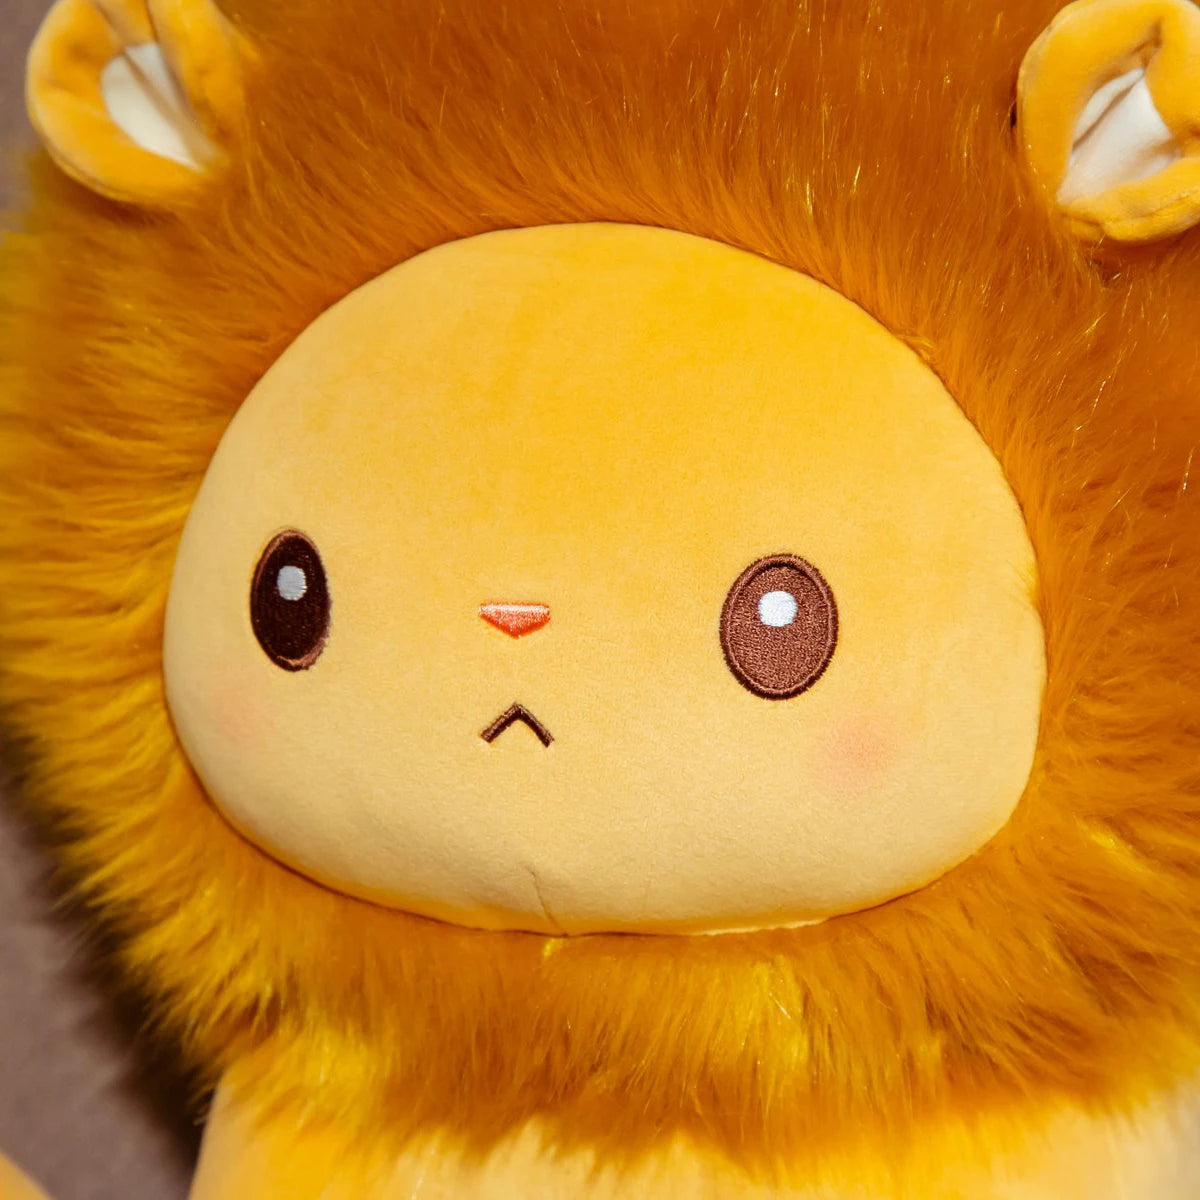 Plush Lion Stuffed Animal 